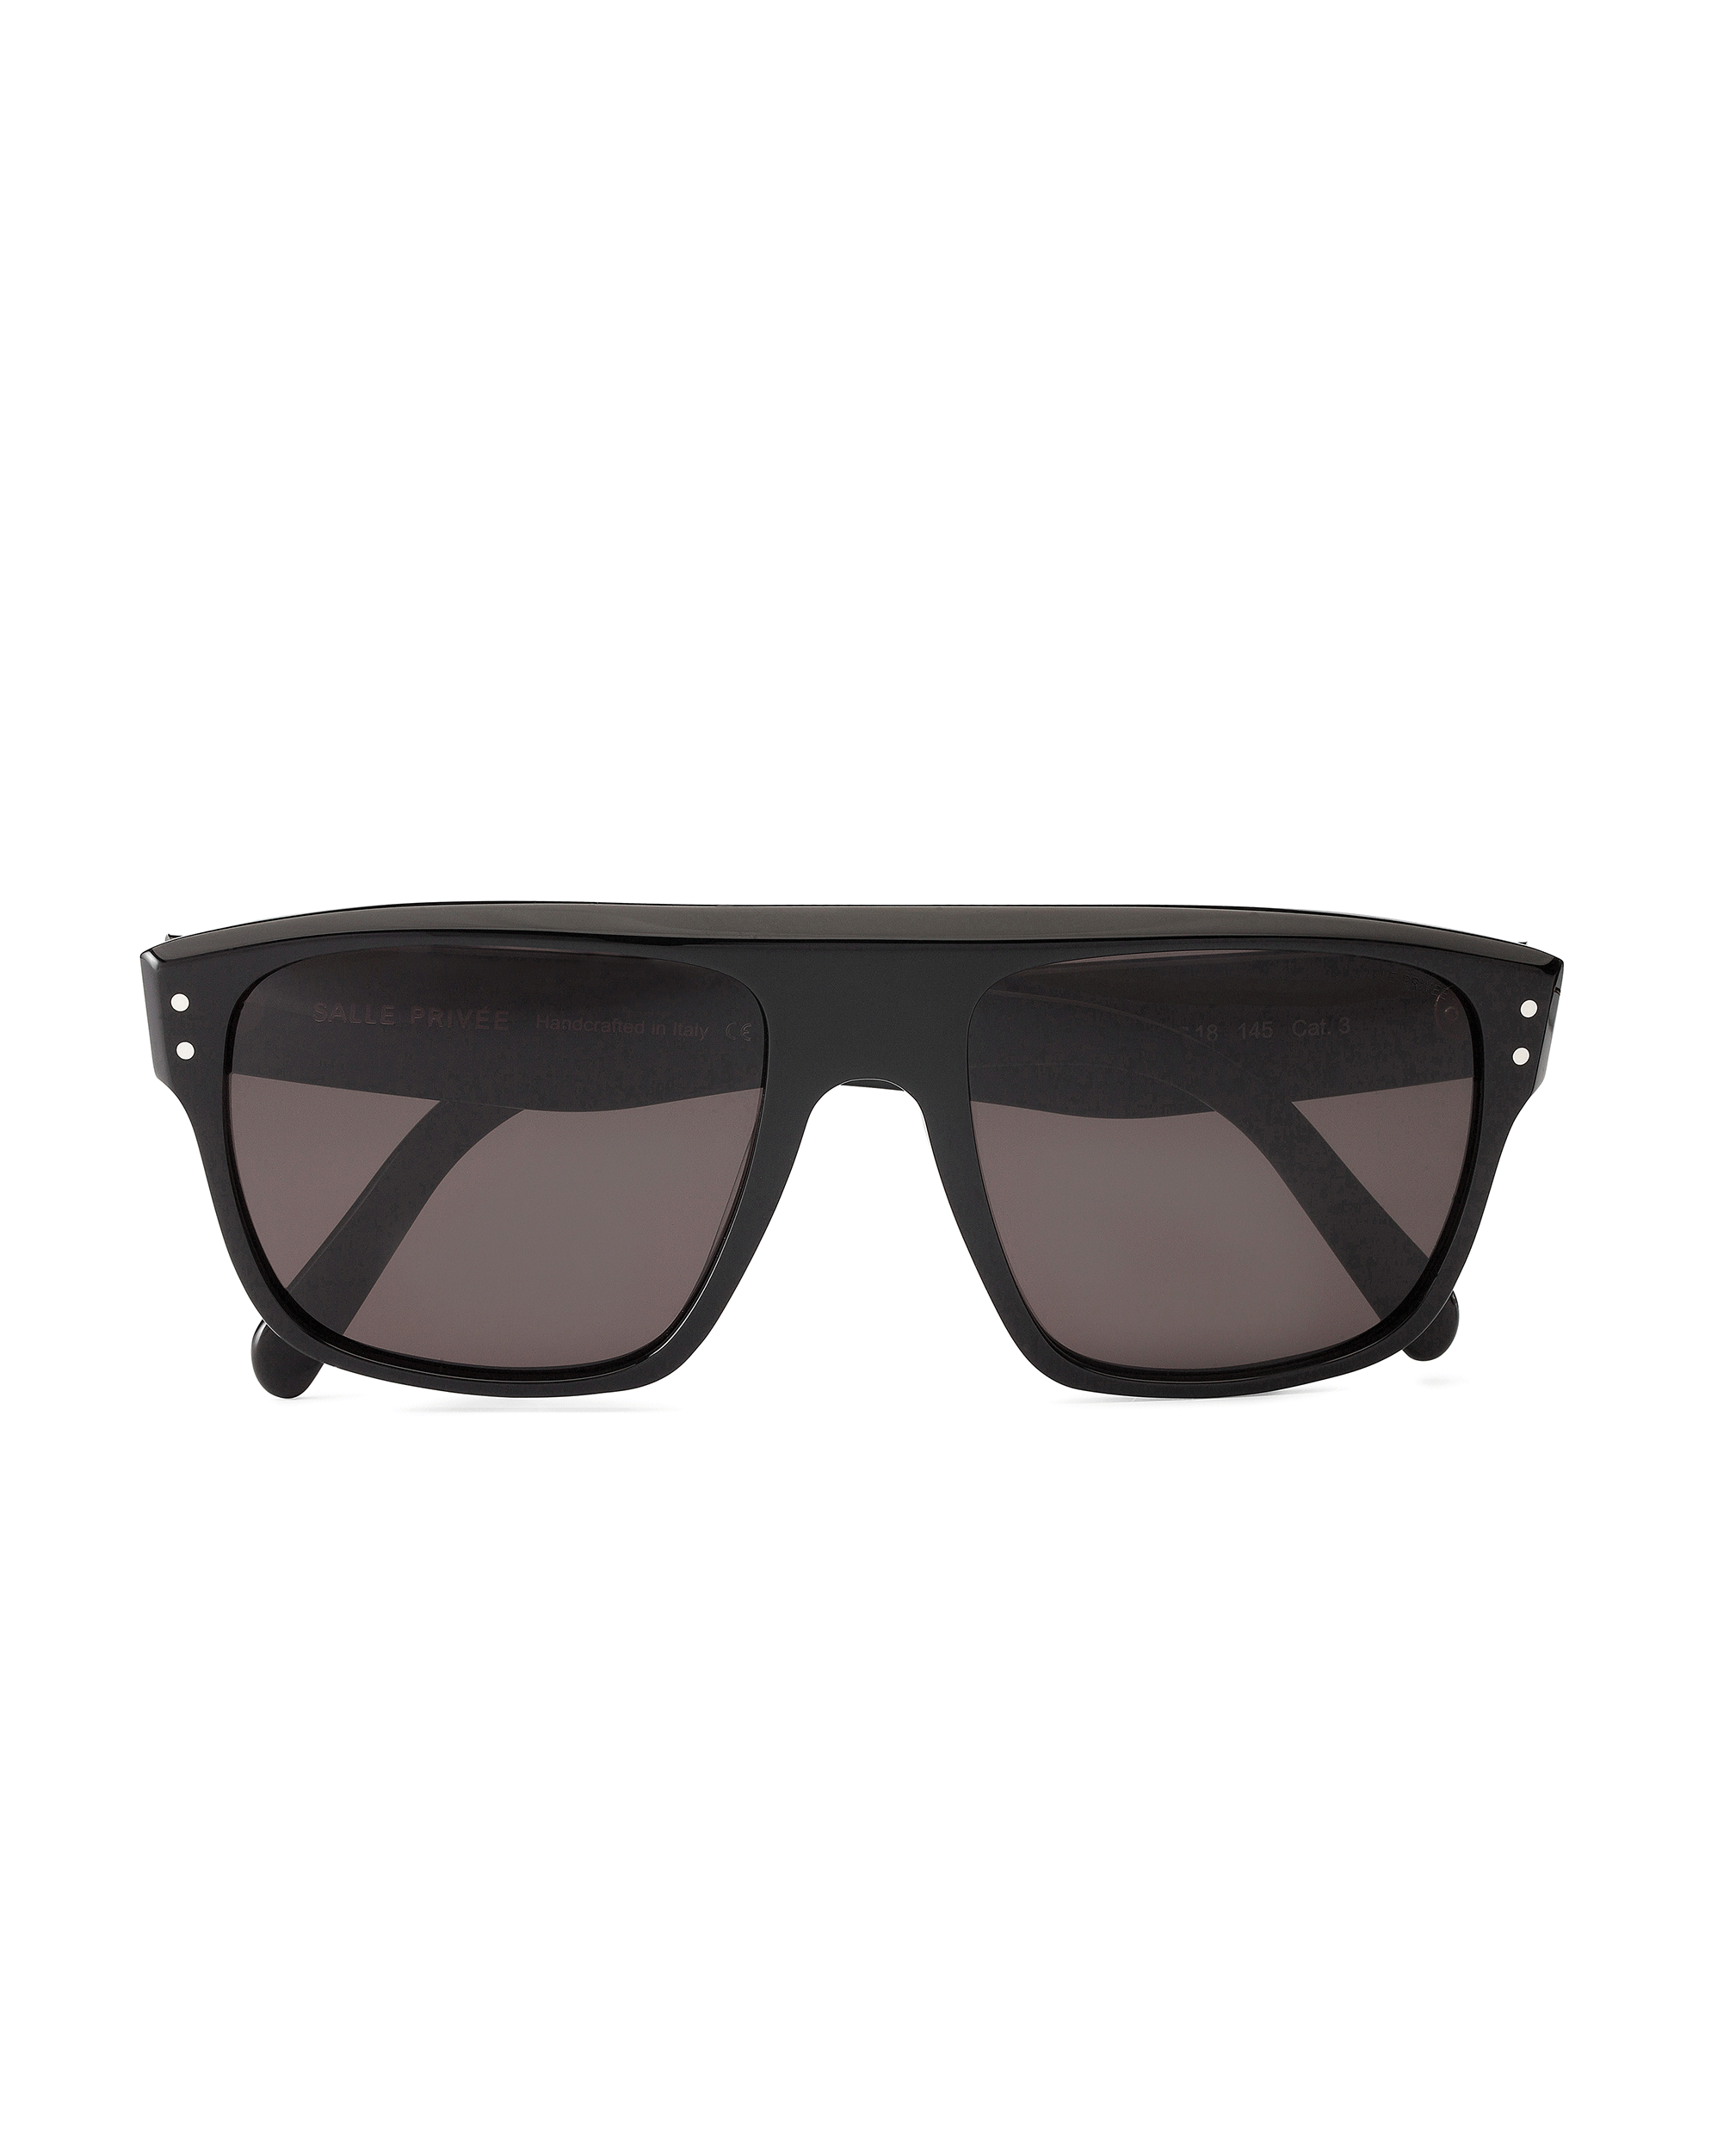 KEITH Sunglasses Black